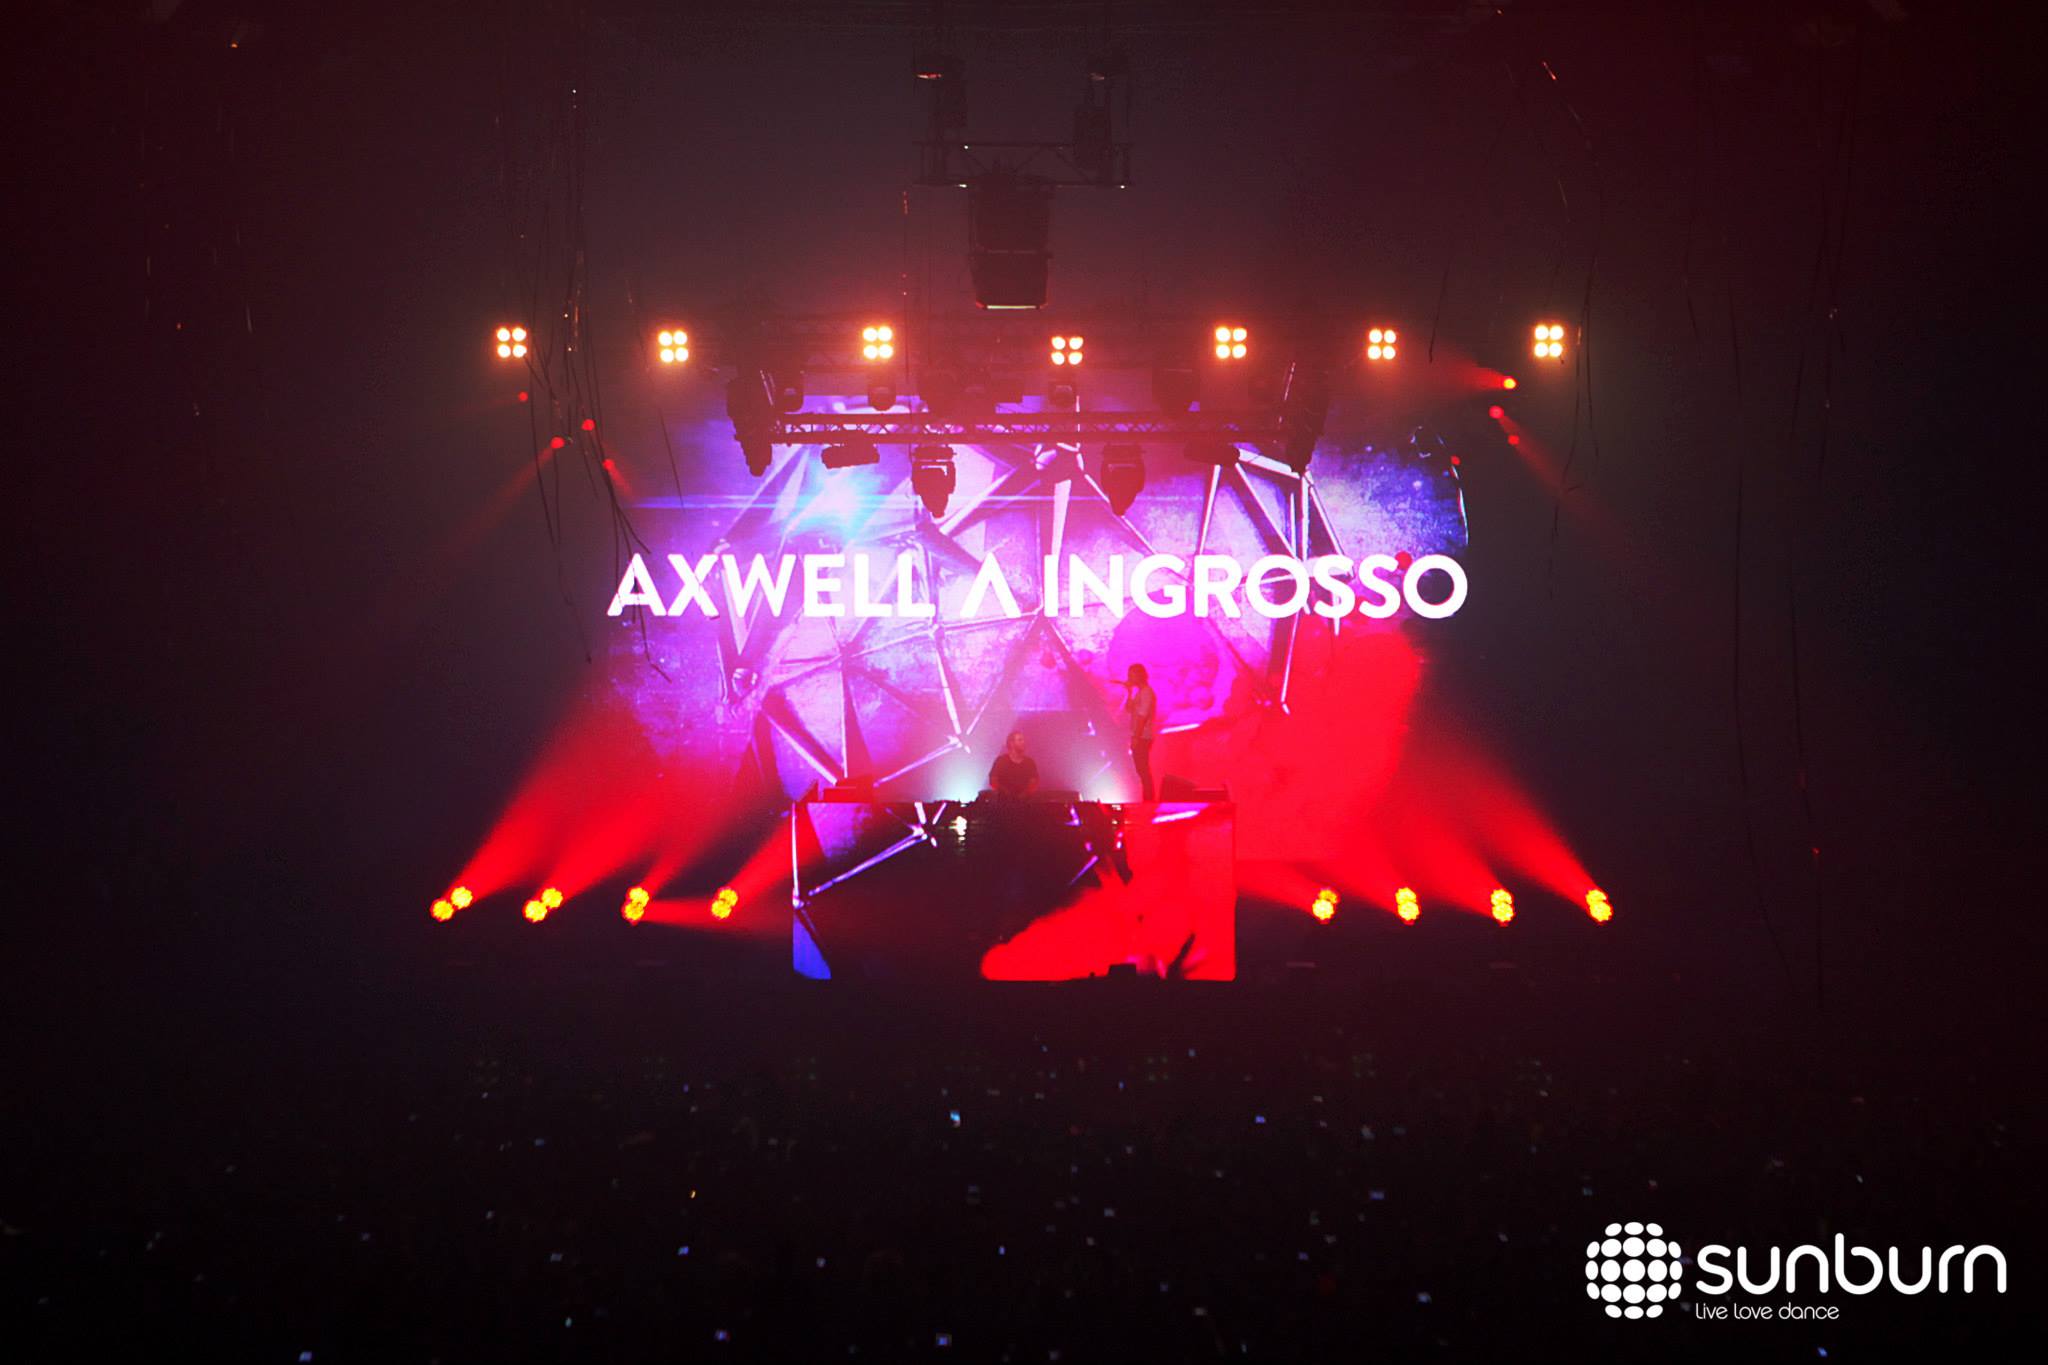 Gig Review: Axwell /\ Ingrosso At Sunburn Arena, Mumbai. The Bangin